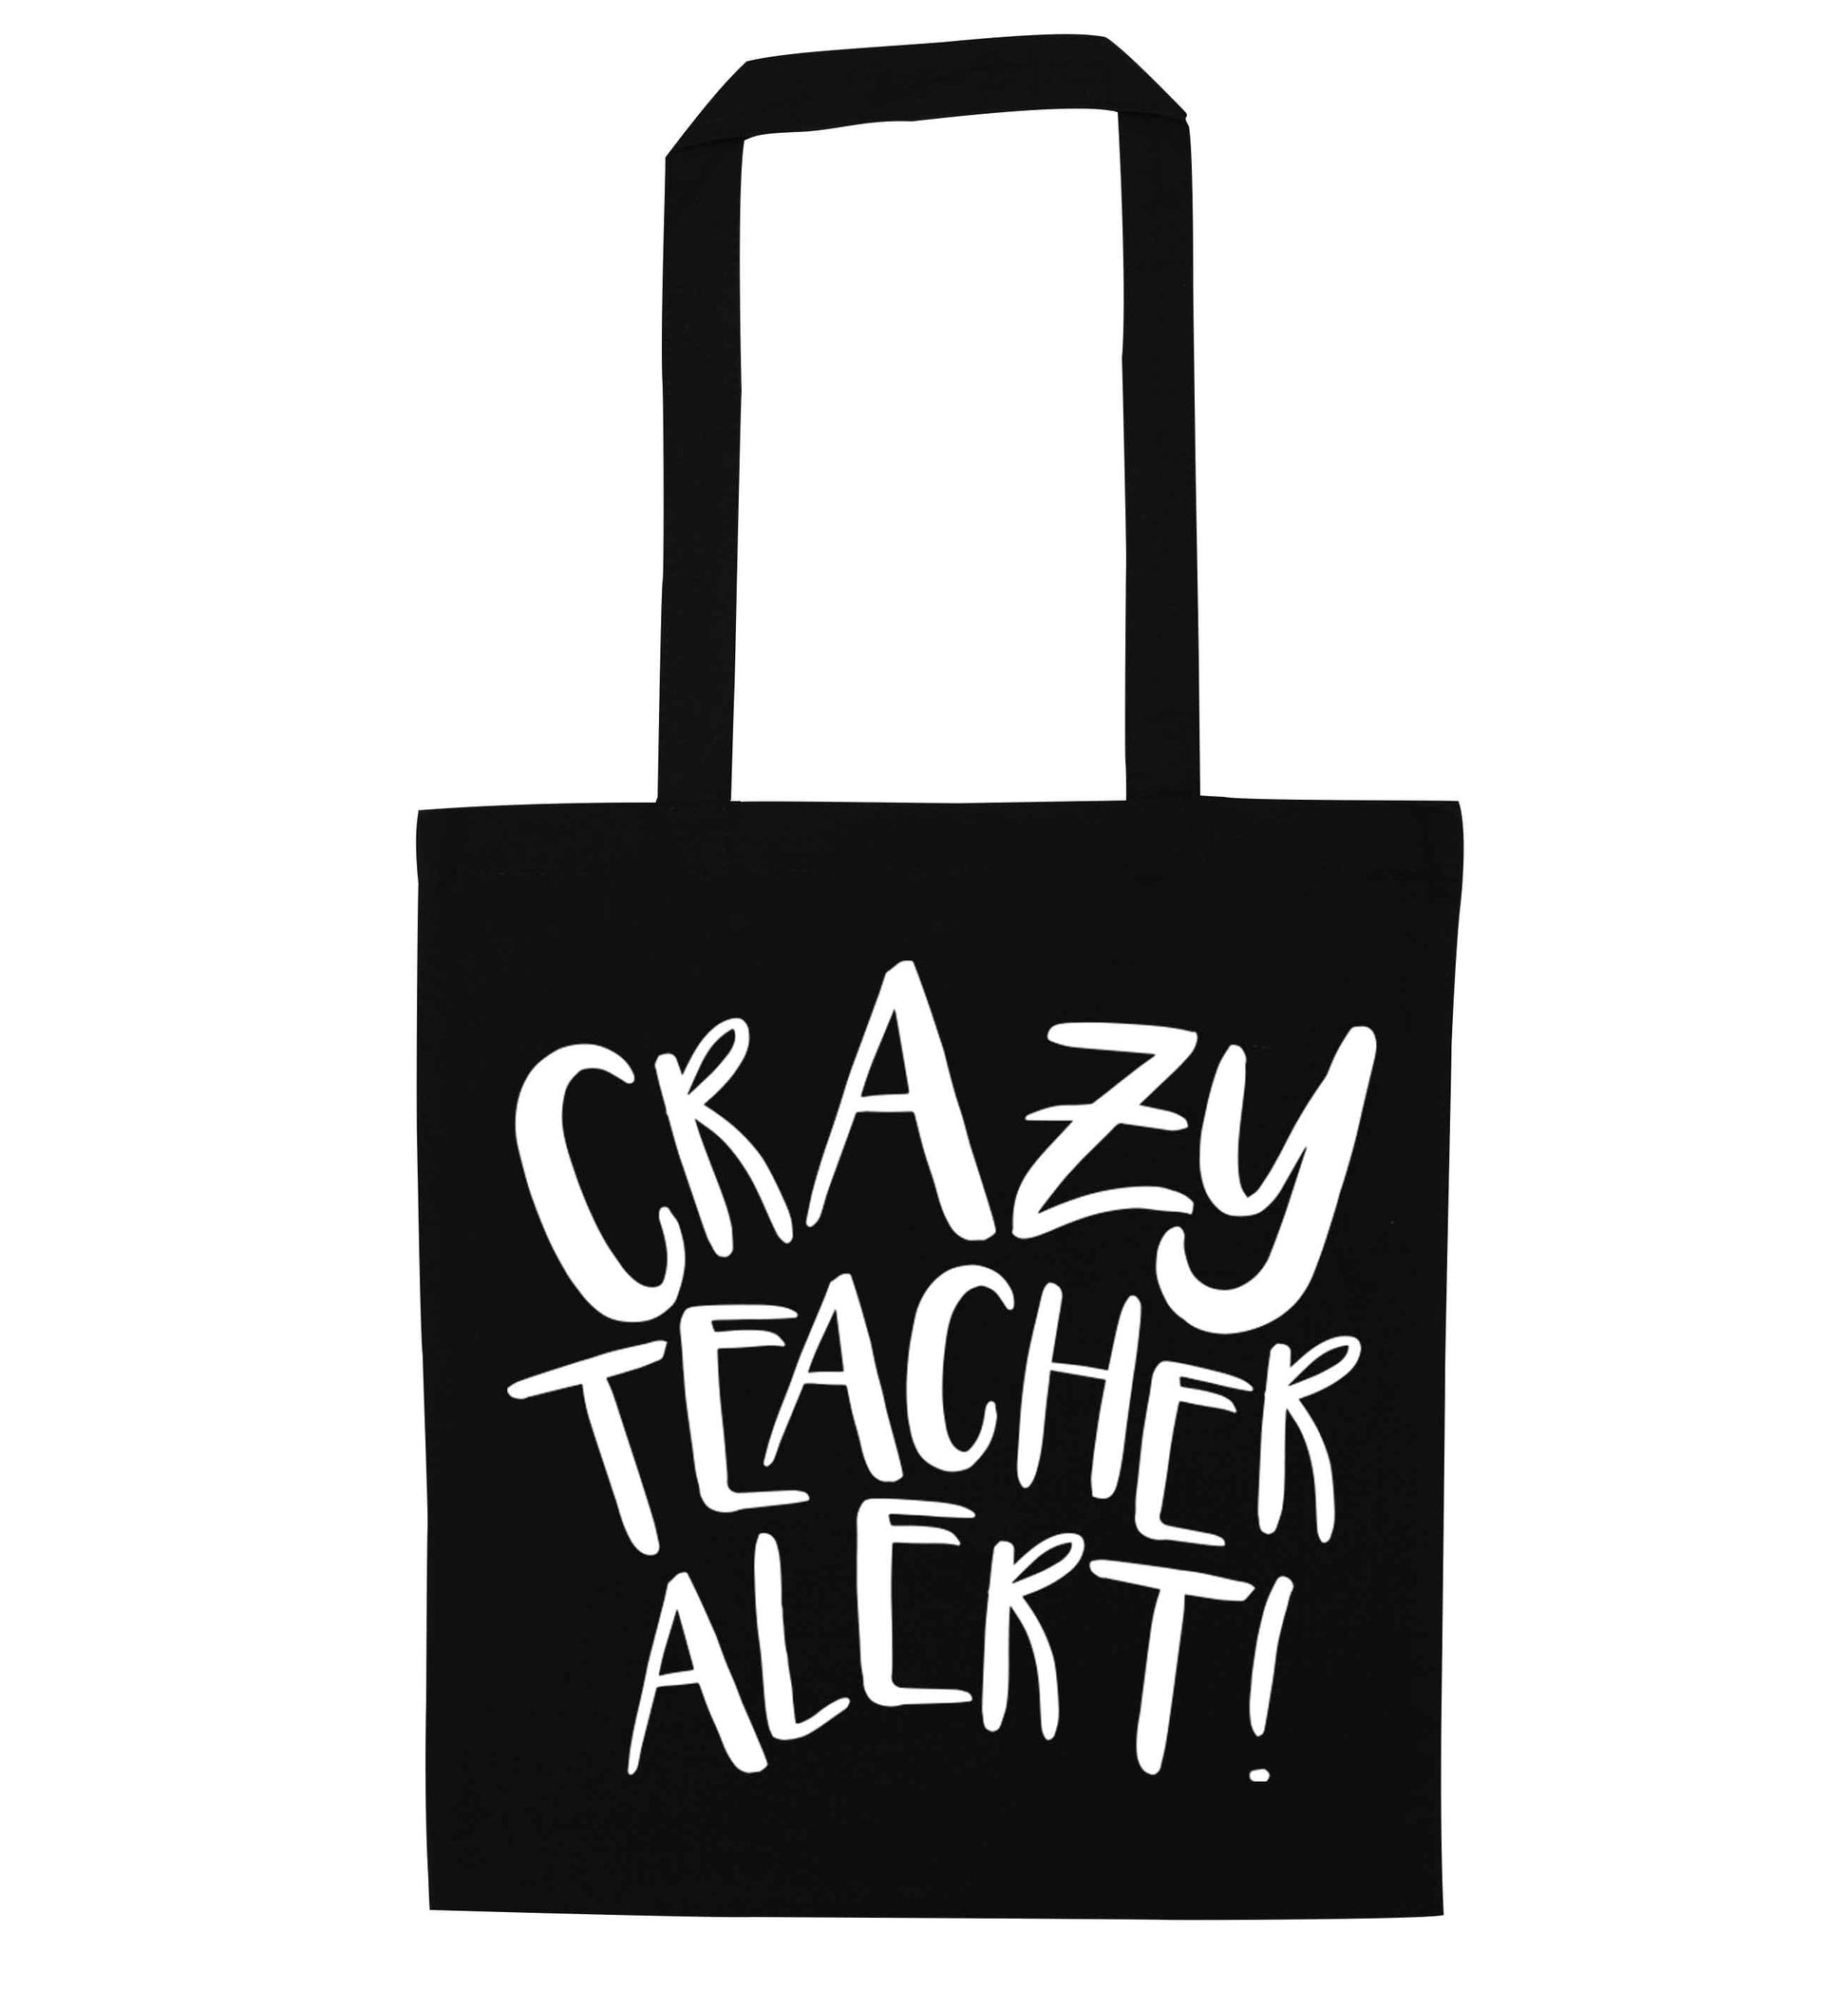 Crazy teacher alert black tote bag